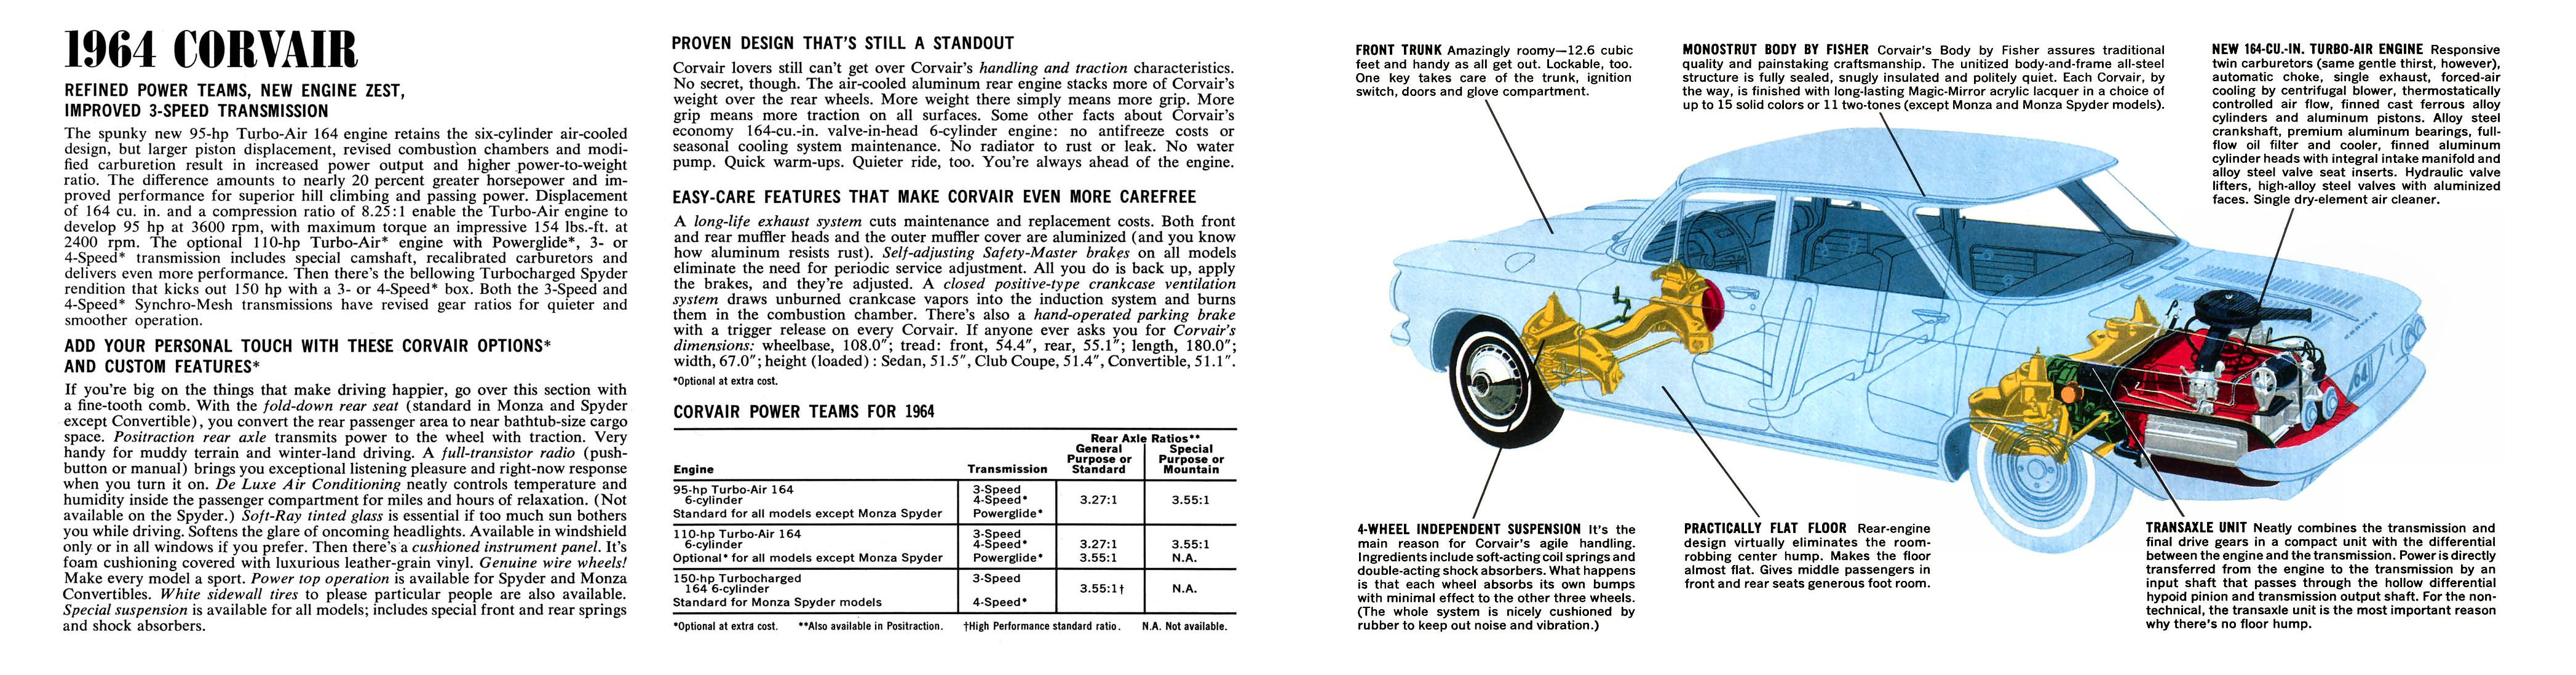 1964_Chevrolet_Corvair-10-11